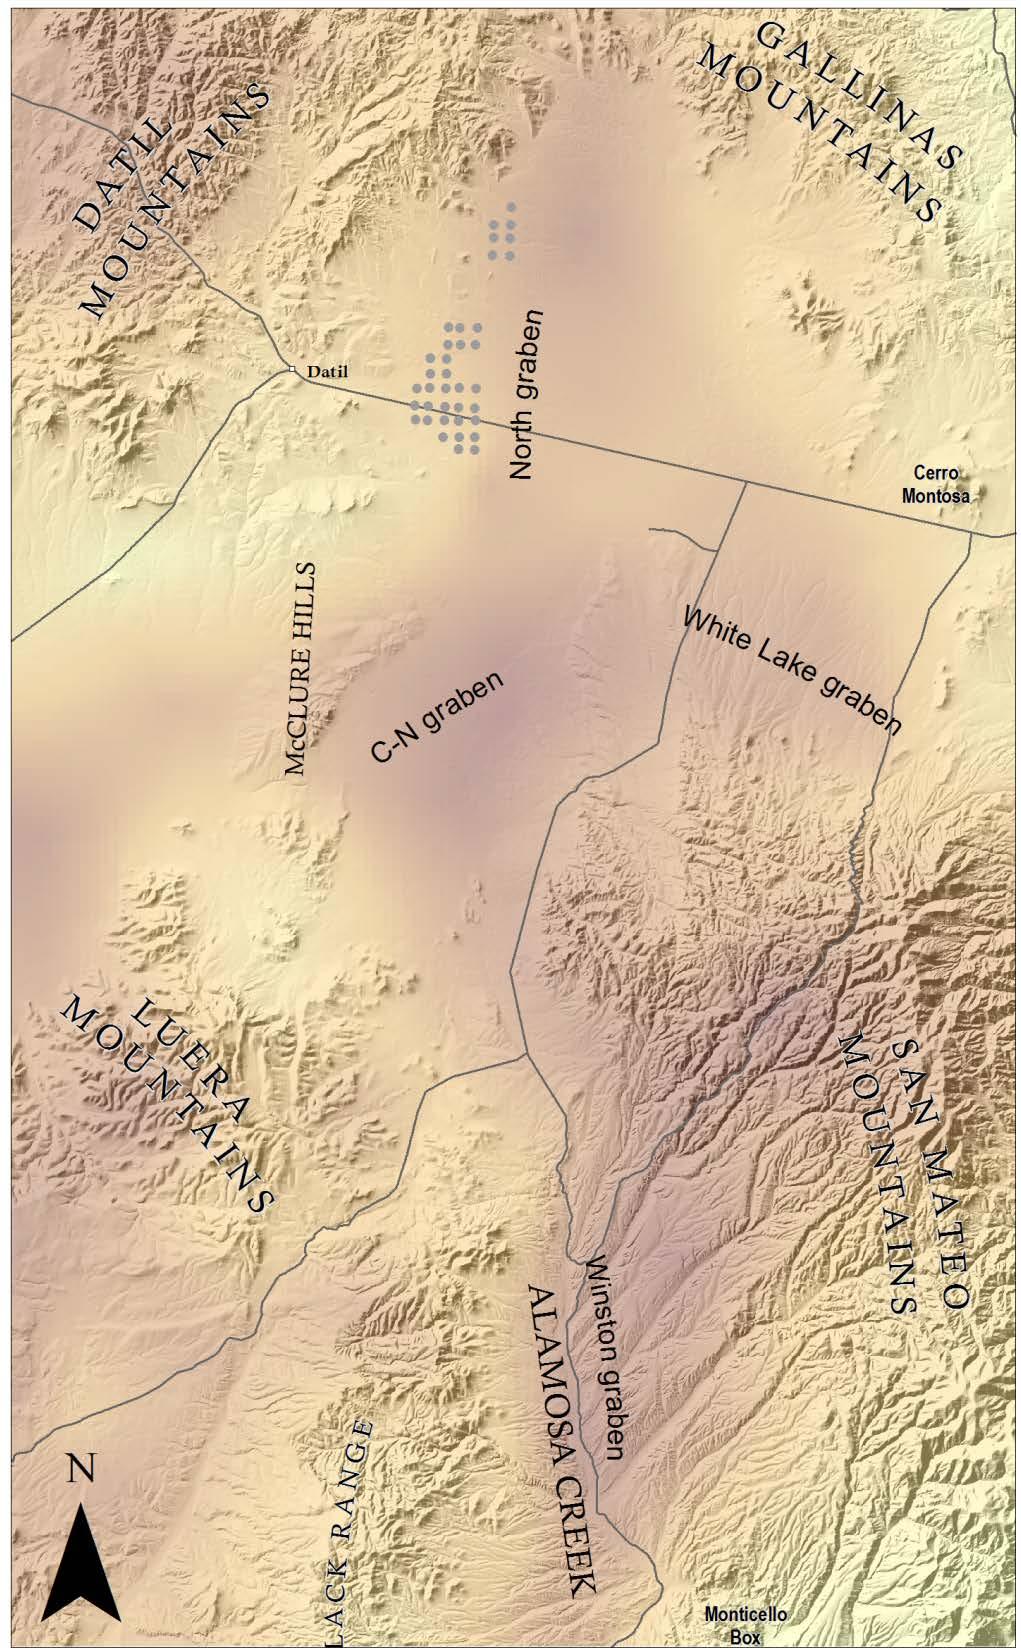 Geologic Boundaries Dark colors = basins Light colors = highs Eastern SA Plains has three grabens: North graben C-N graben White Lake graben